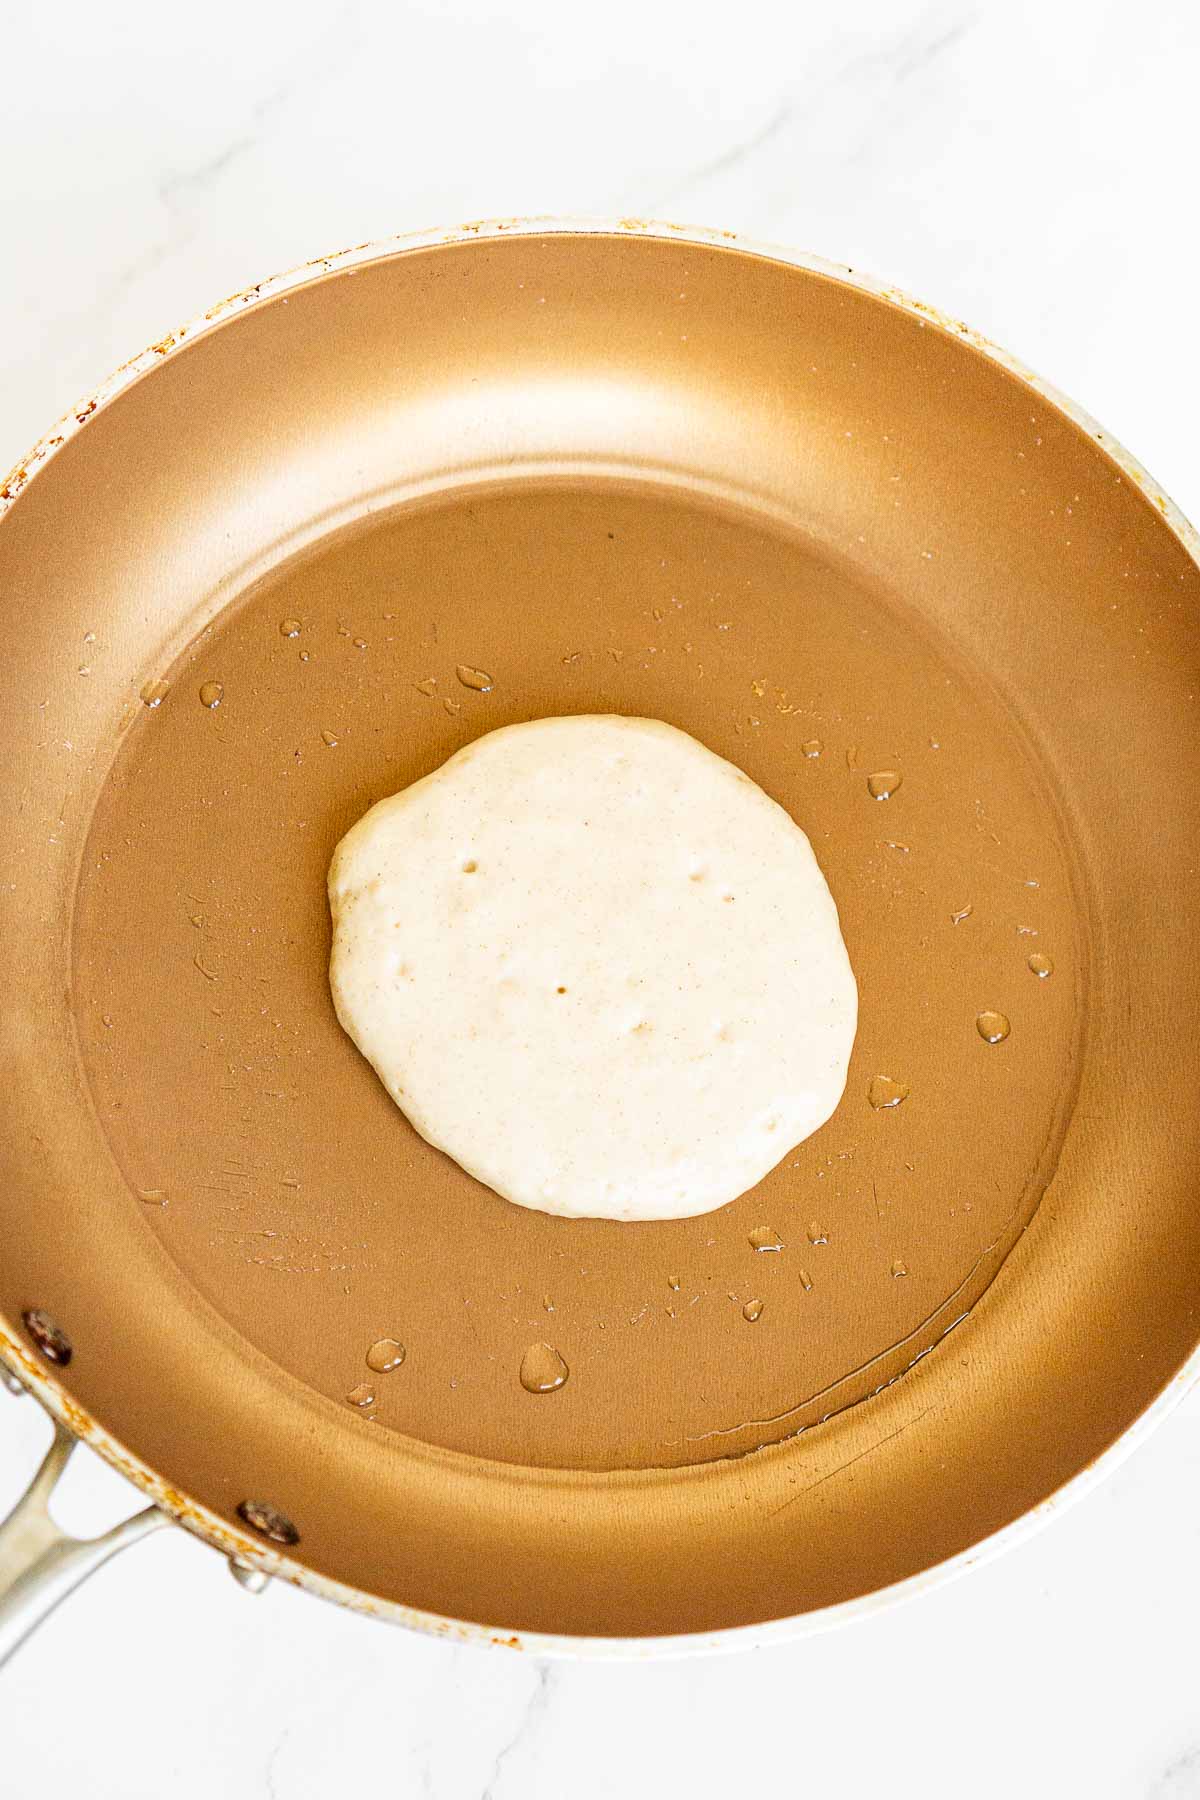 Cinnamon pancake cooking in a pan.